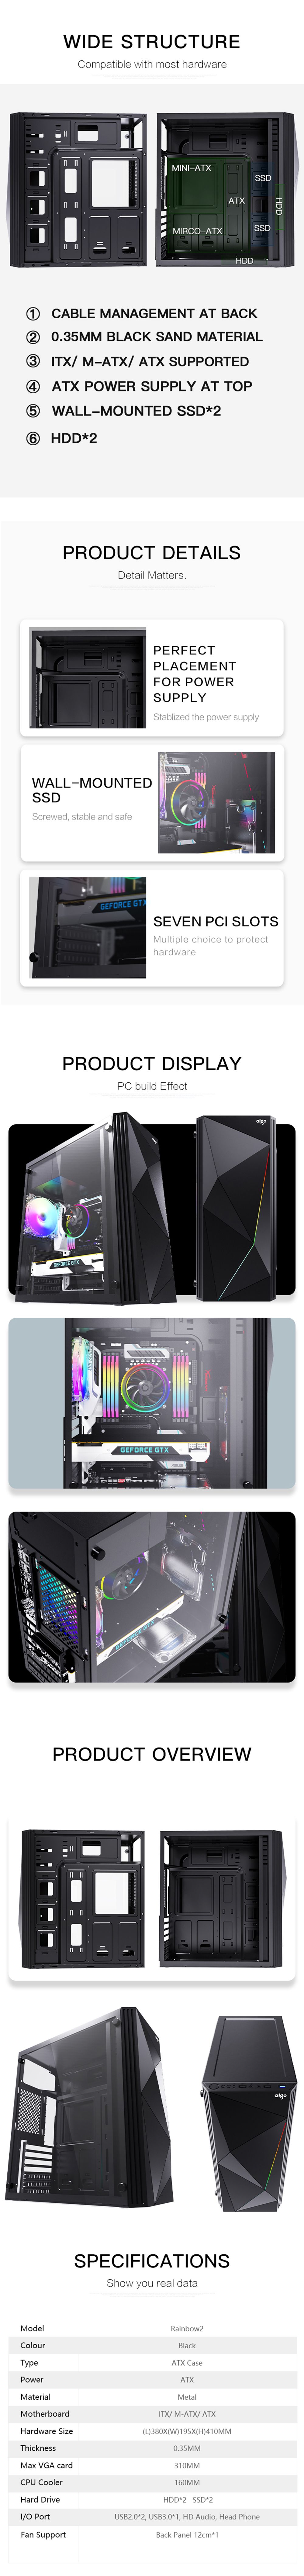 Aigo-Rainbow2-Computer-Case-Acrylic-Side-Panel-ATXM-ATXITX-Supported-USB-30-1665870